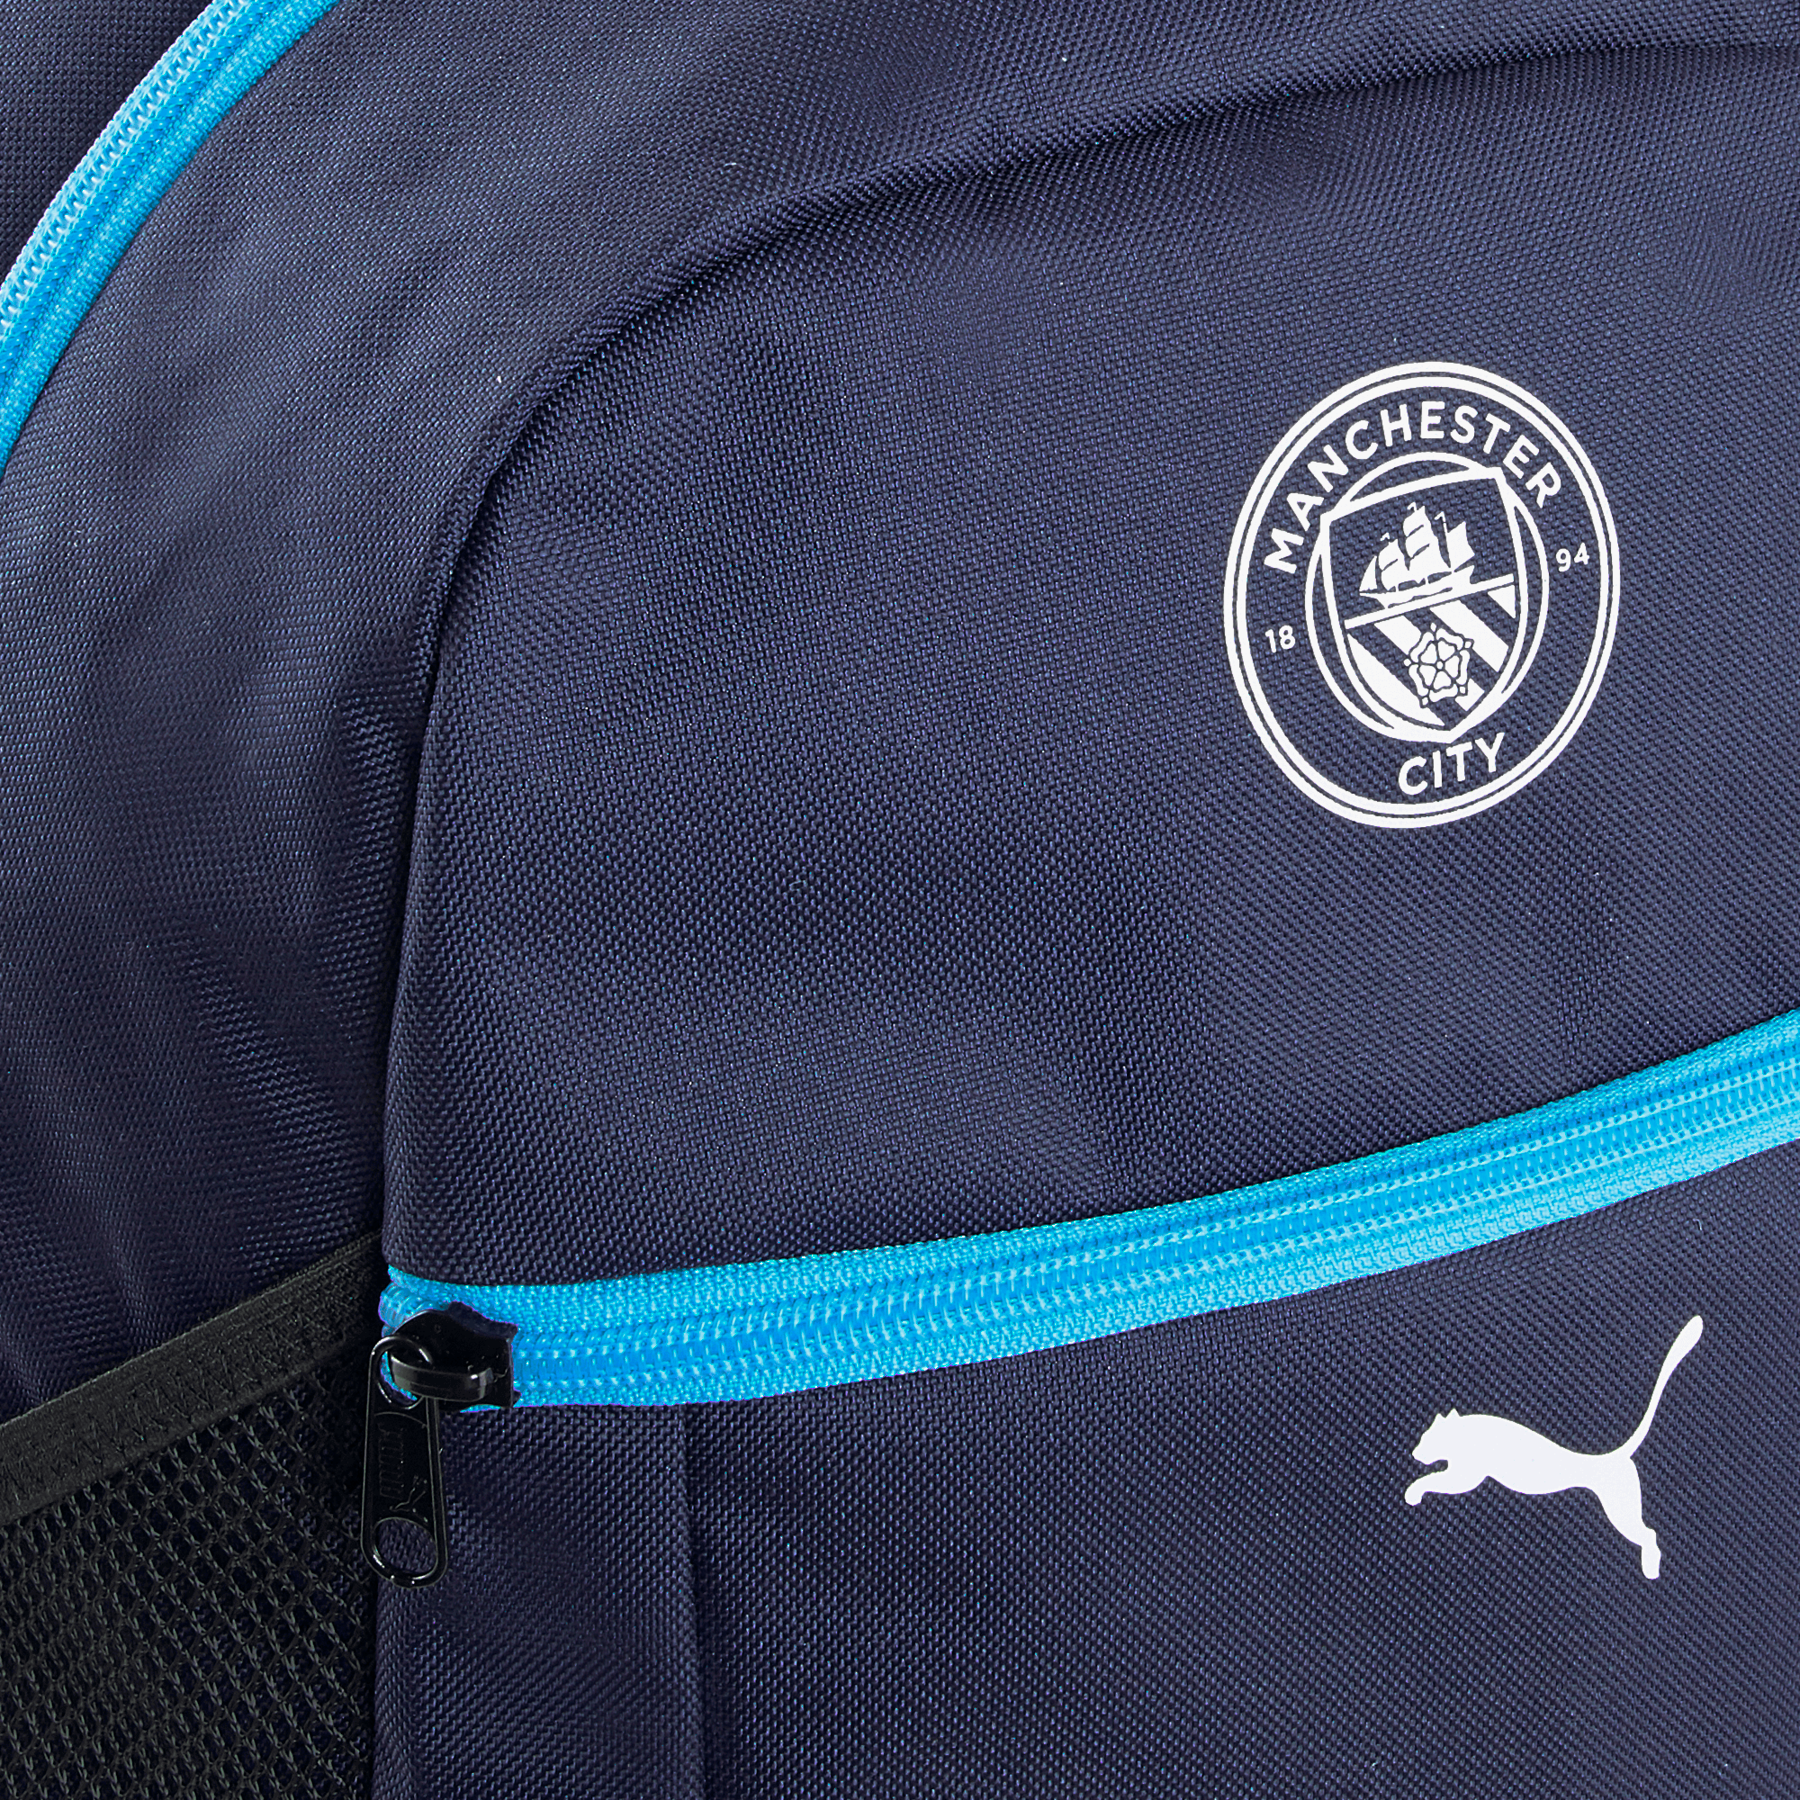 Manchester City Football FtblCulture Backpack Gym Bag Puma Black | eBay